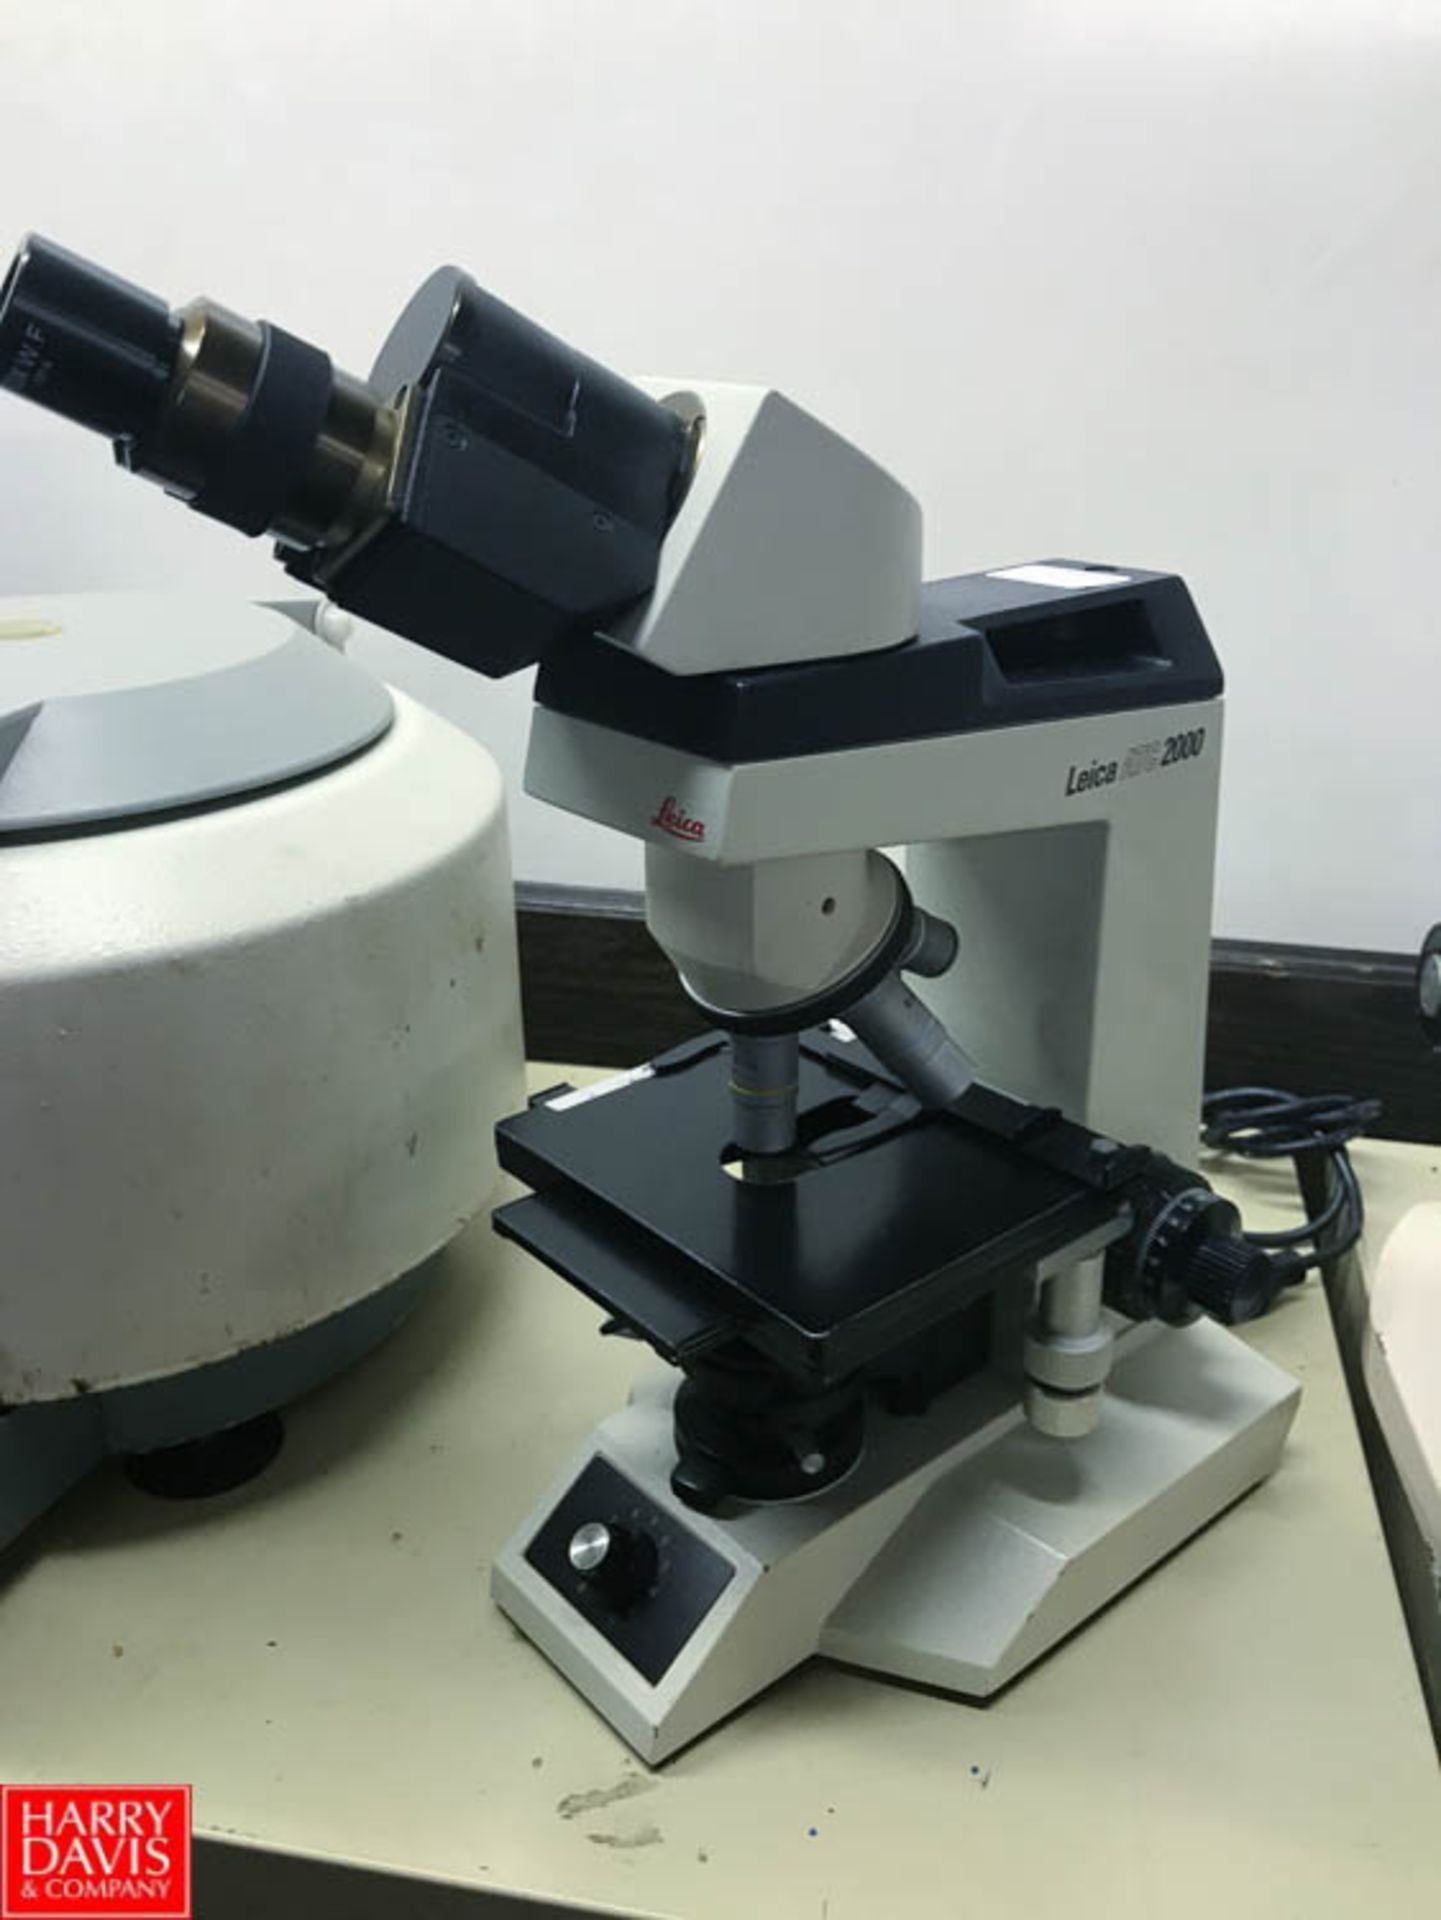 Leica Microscope, Model ATC2000 Rigging Fee: $ 25 Location: Pittsburgh, PA